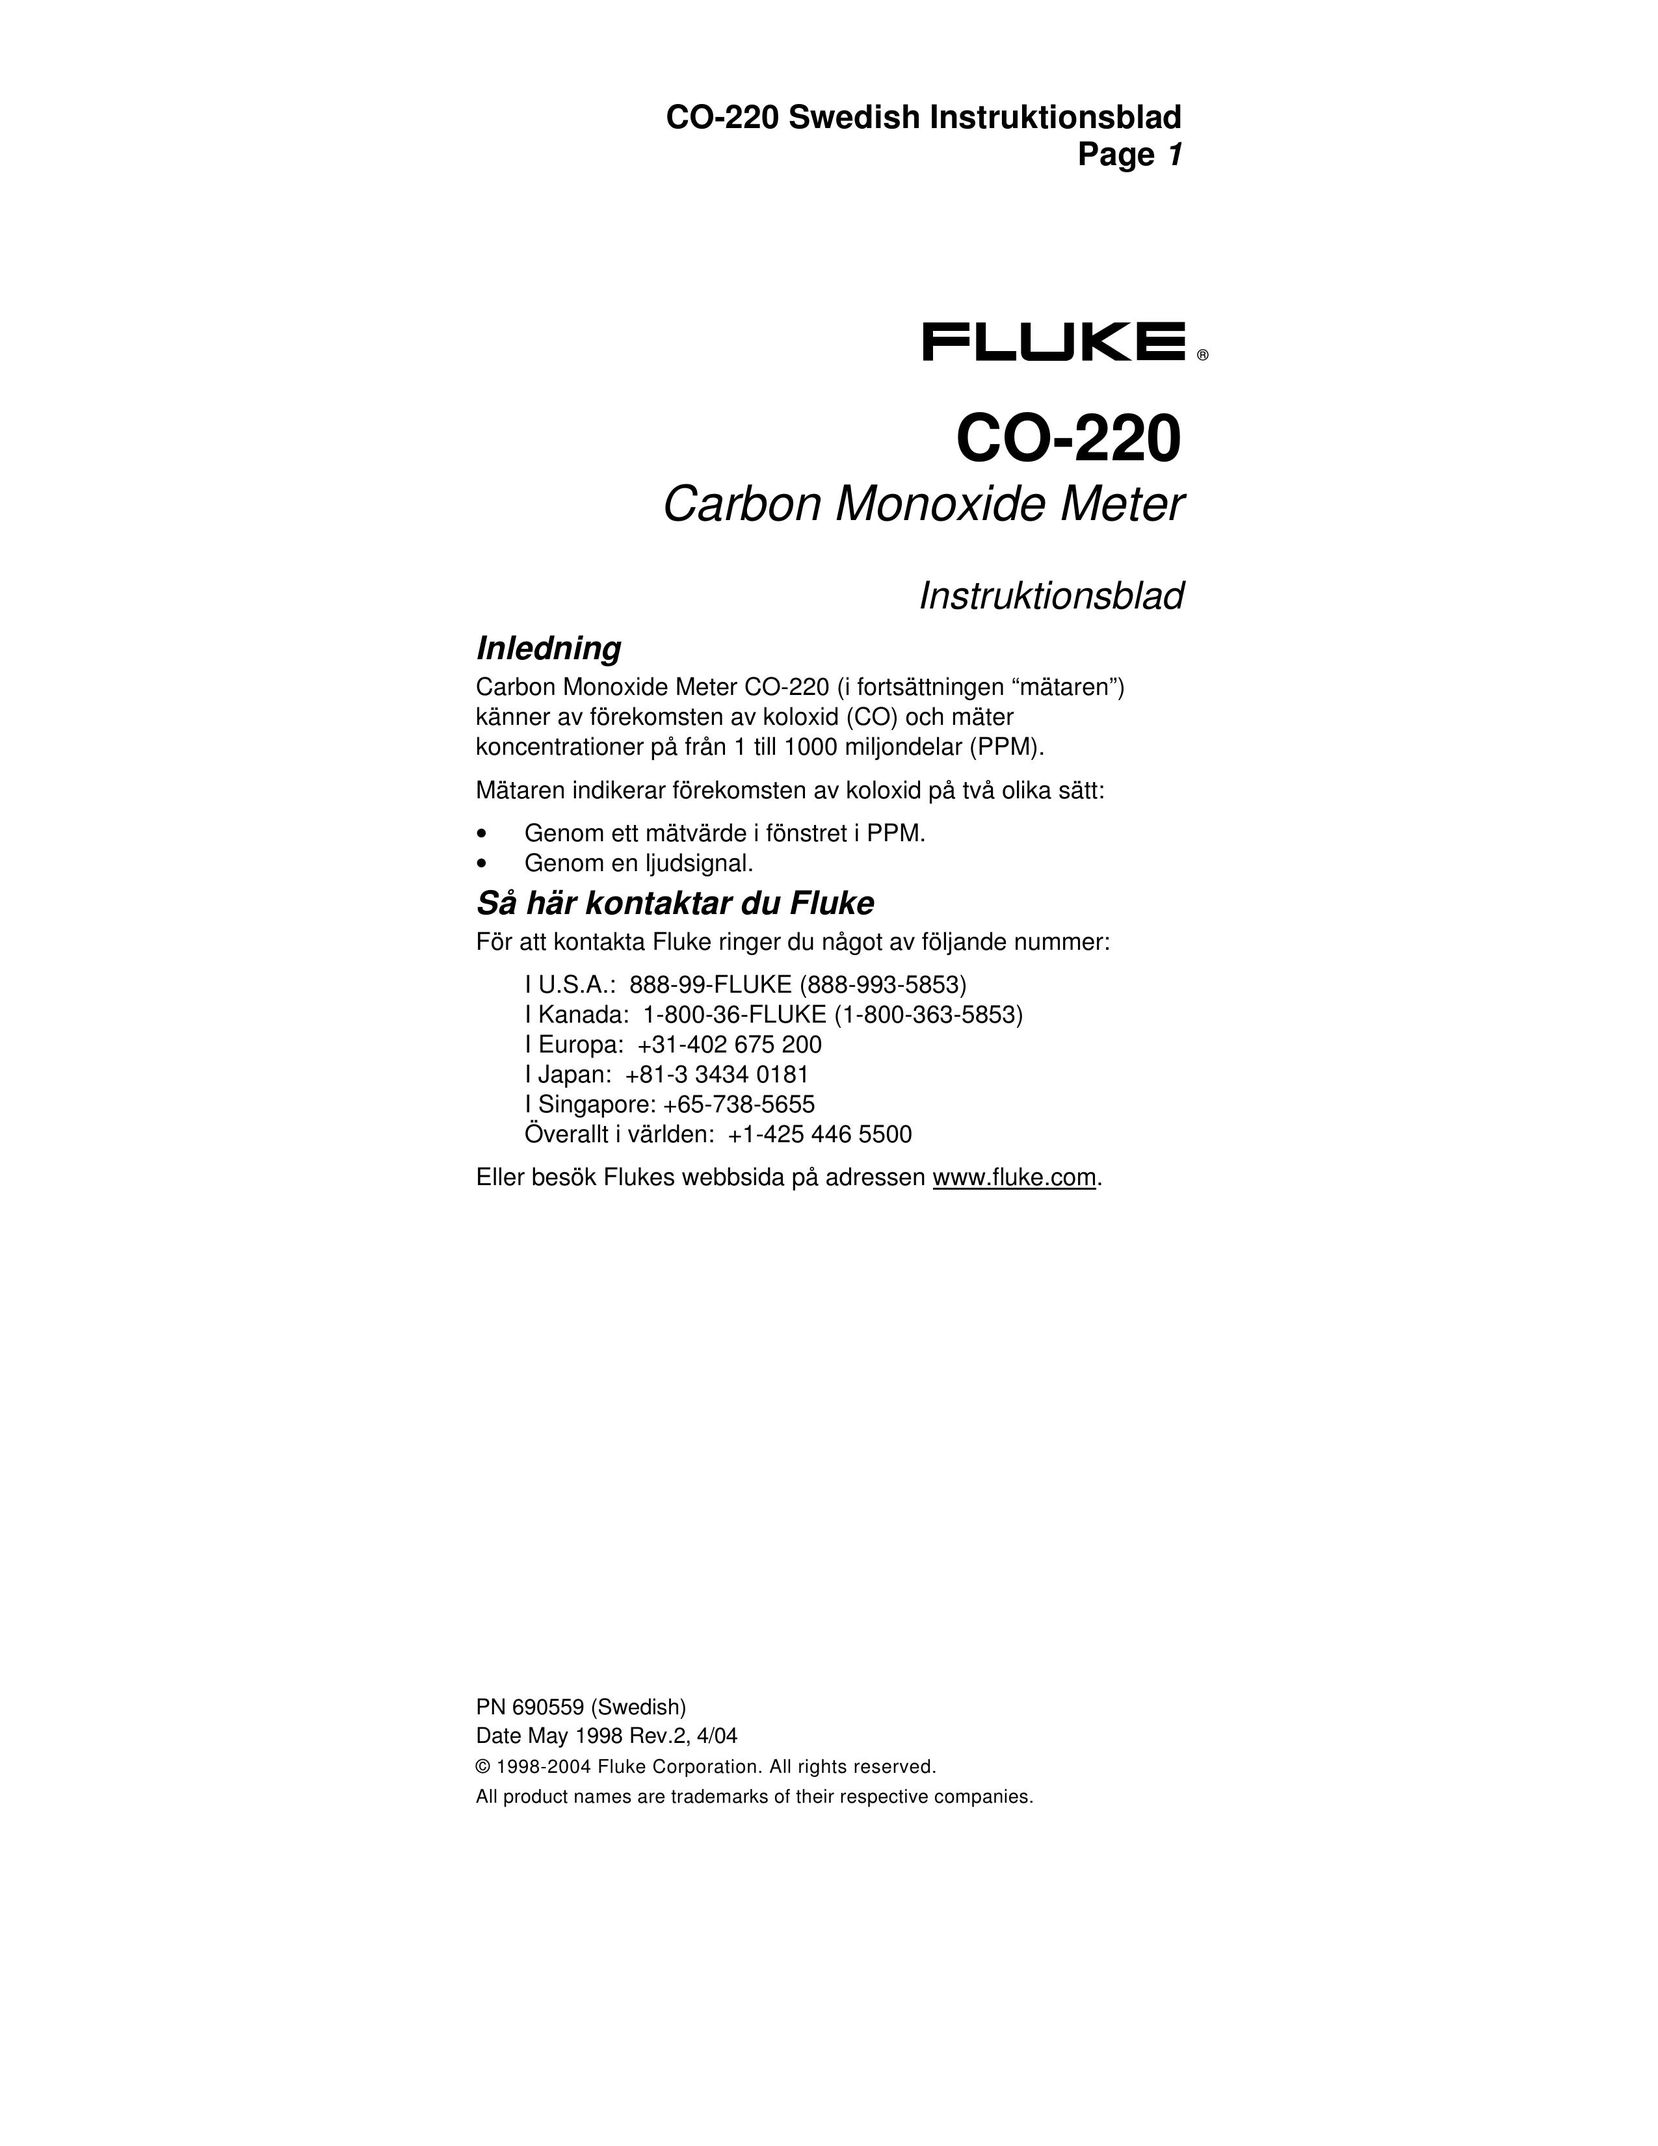 Fluke CO-220 Carbon Monoxide Alarm User Manual